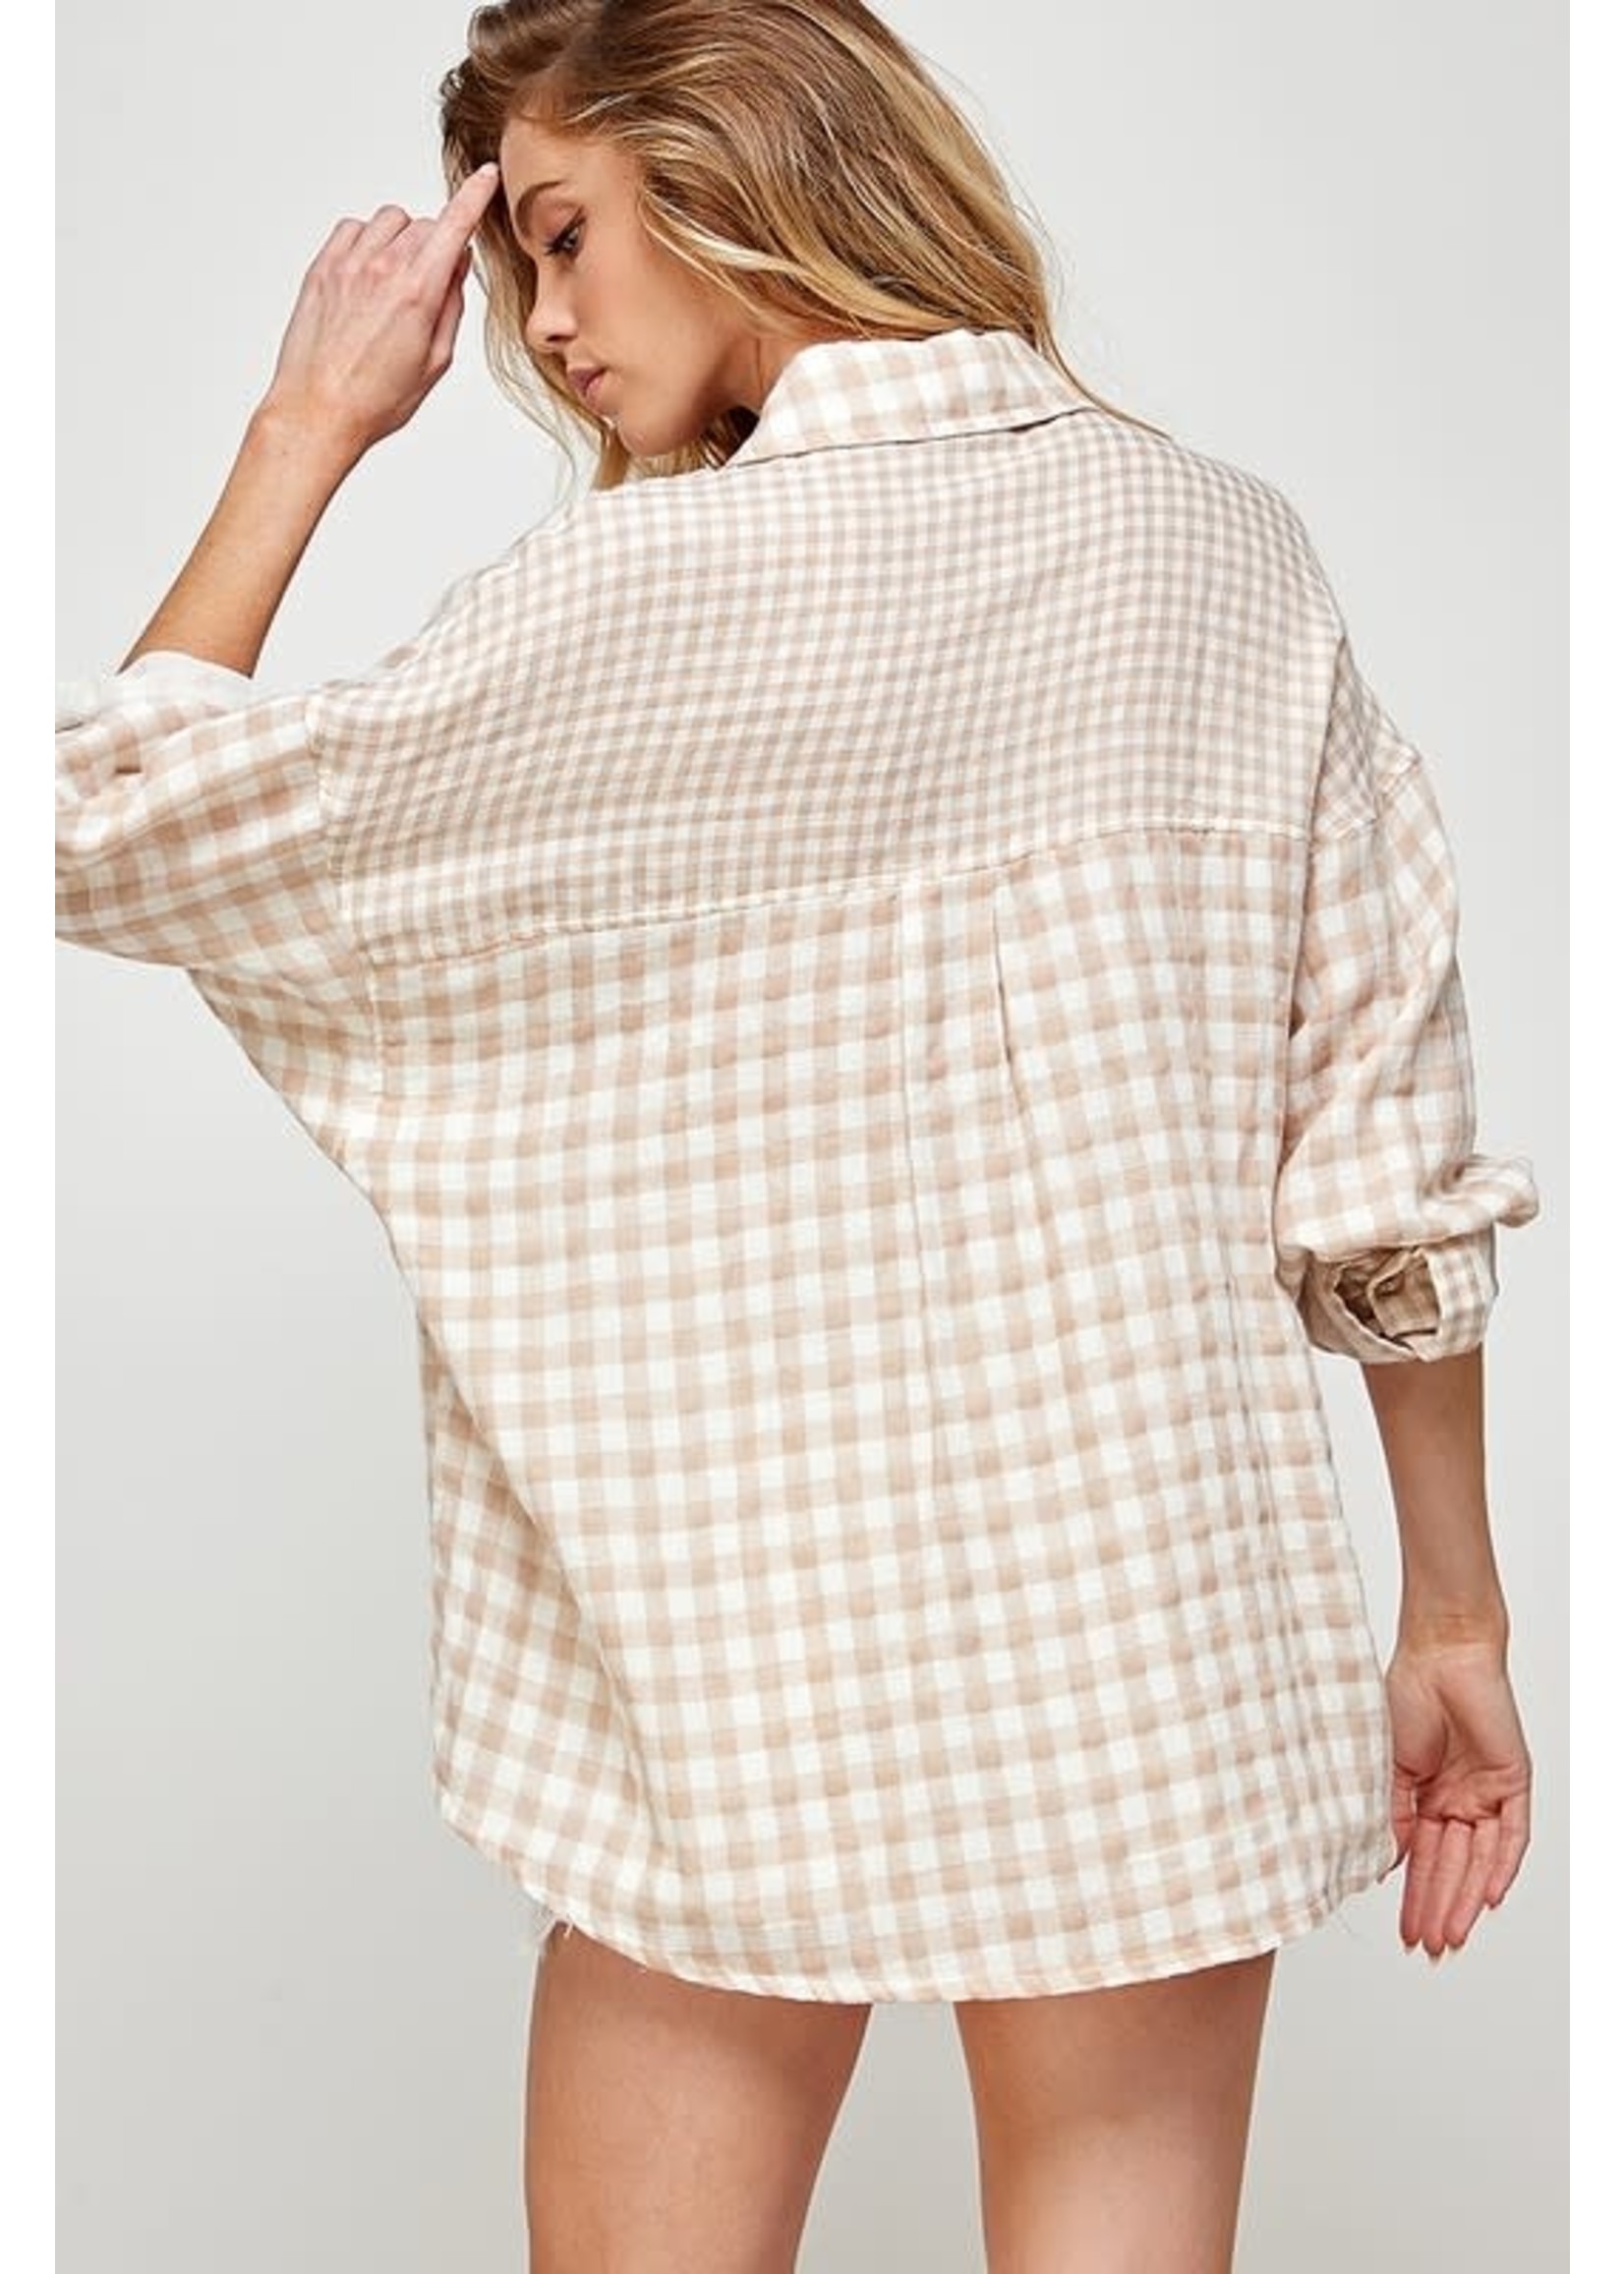 EM & ELLE Harrison Checkered Shirt